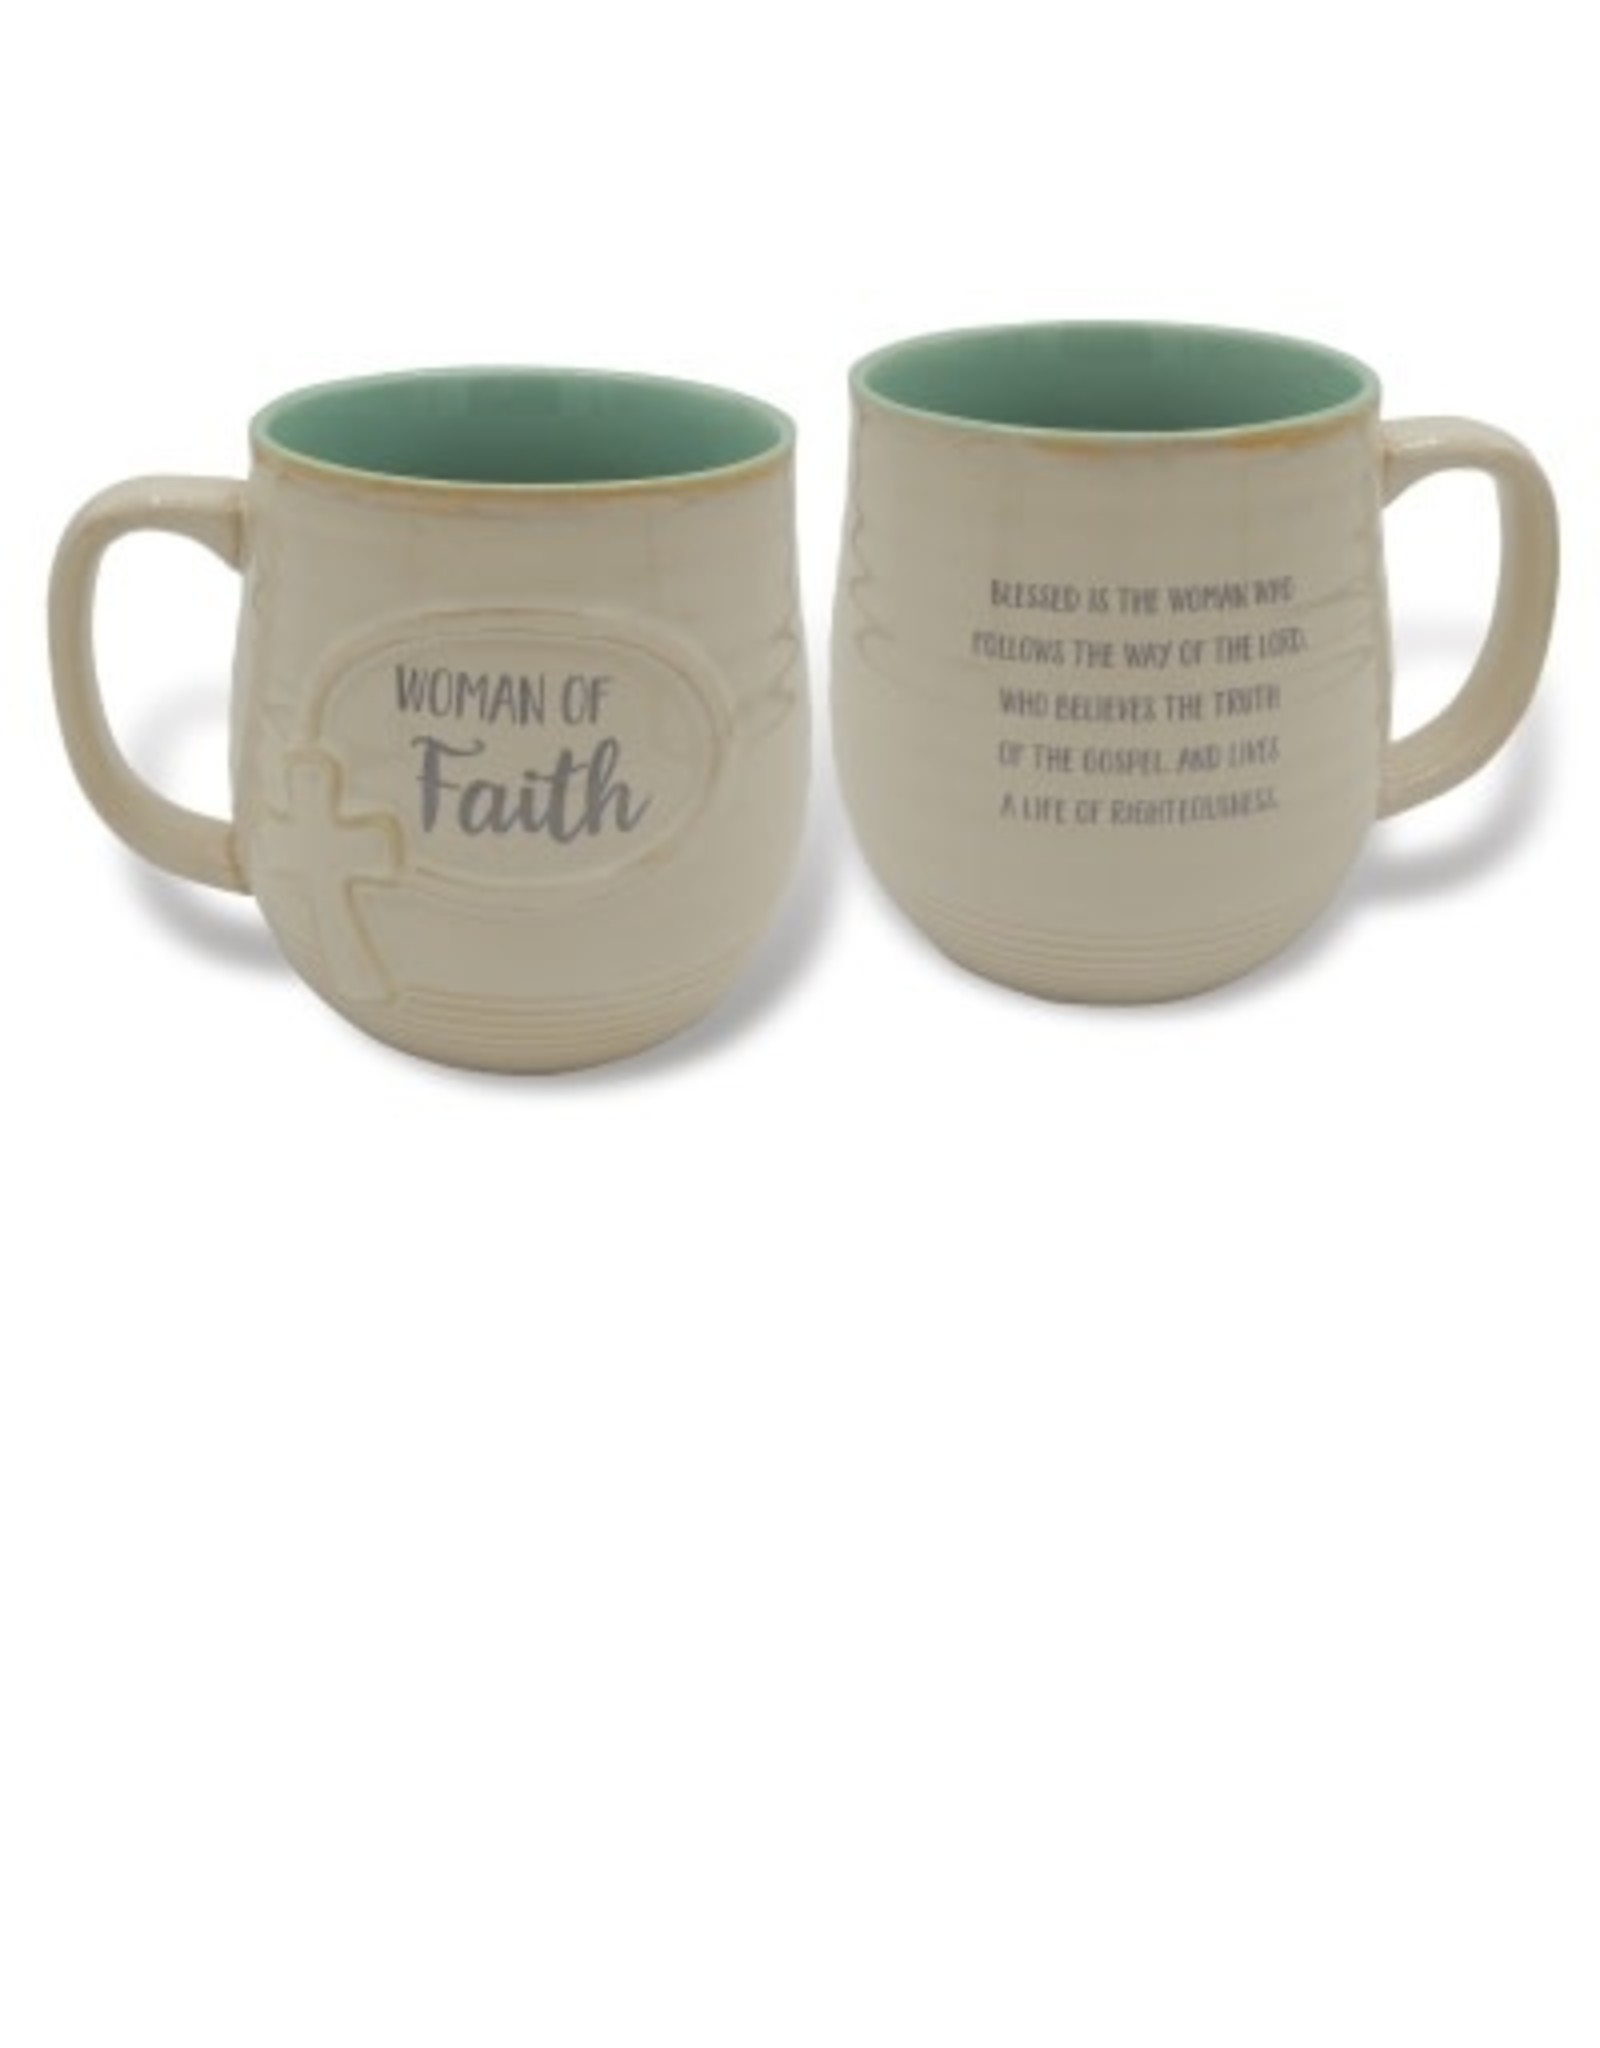 Cathedral Art Stoneware Mug - Woman of Faith